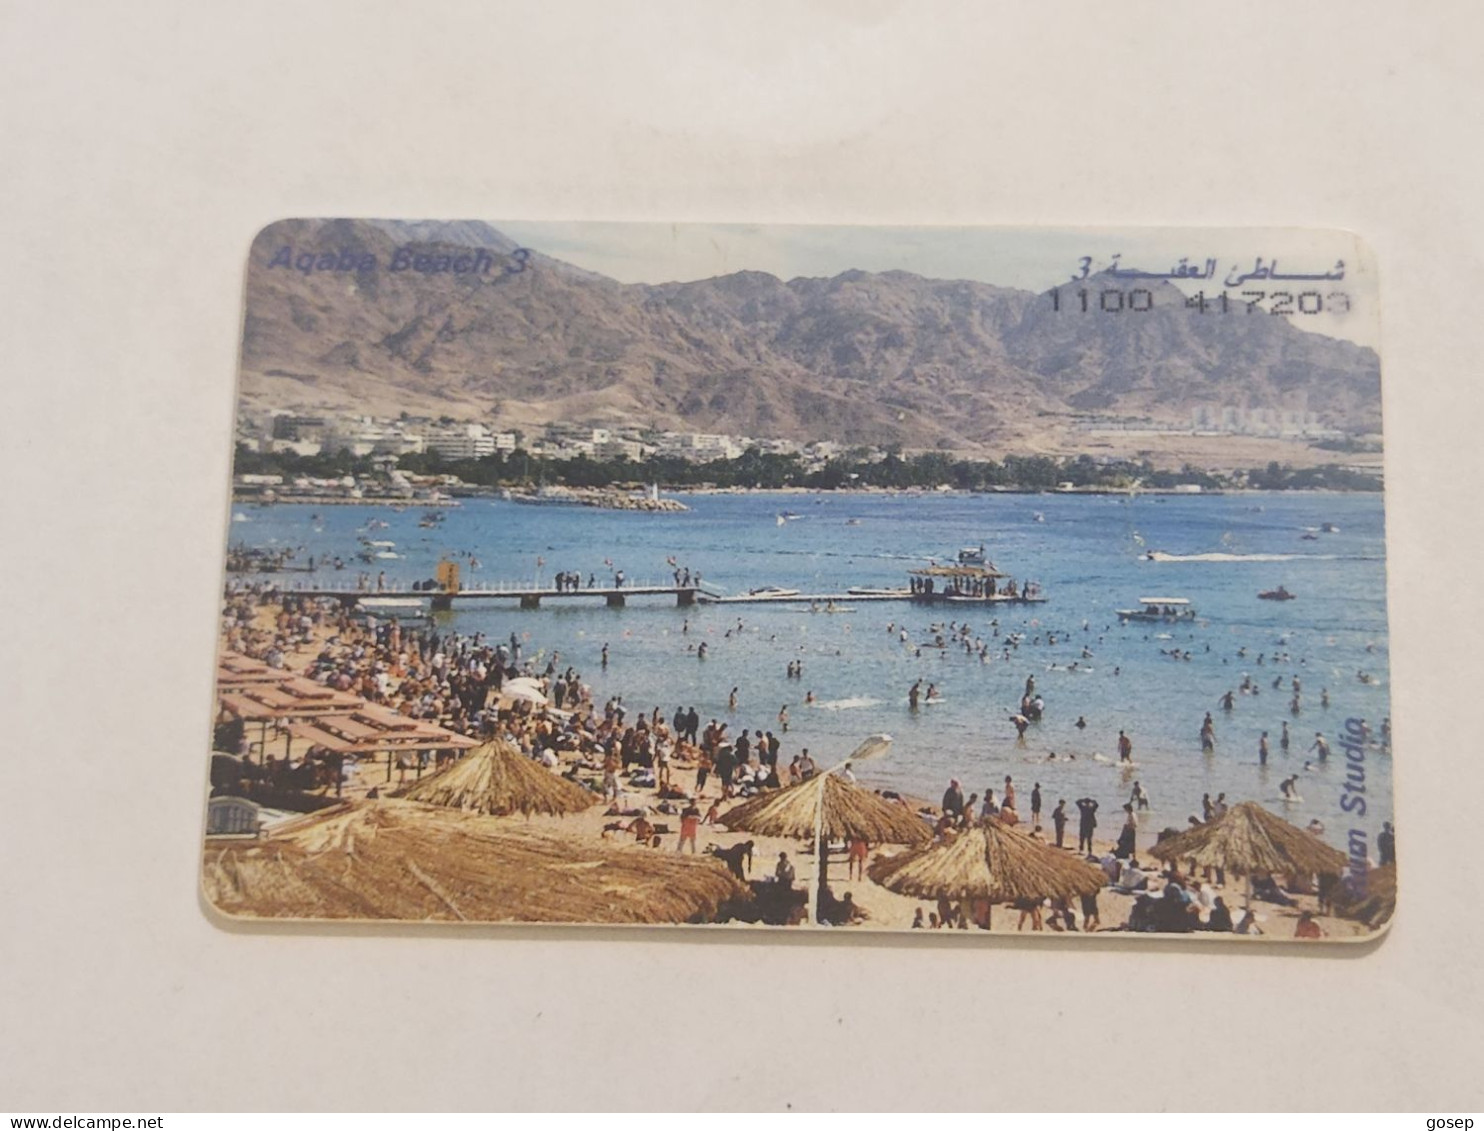 JORDAN-(JO-ALO-0027)-Aqaba Beach-(121)-(1100-417203)-(3JD)-(9/2000)-used Card+1card Prepiad Free - Jordanien